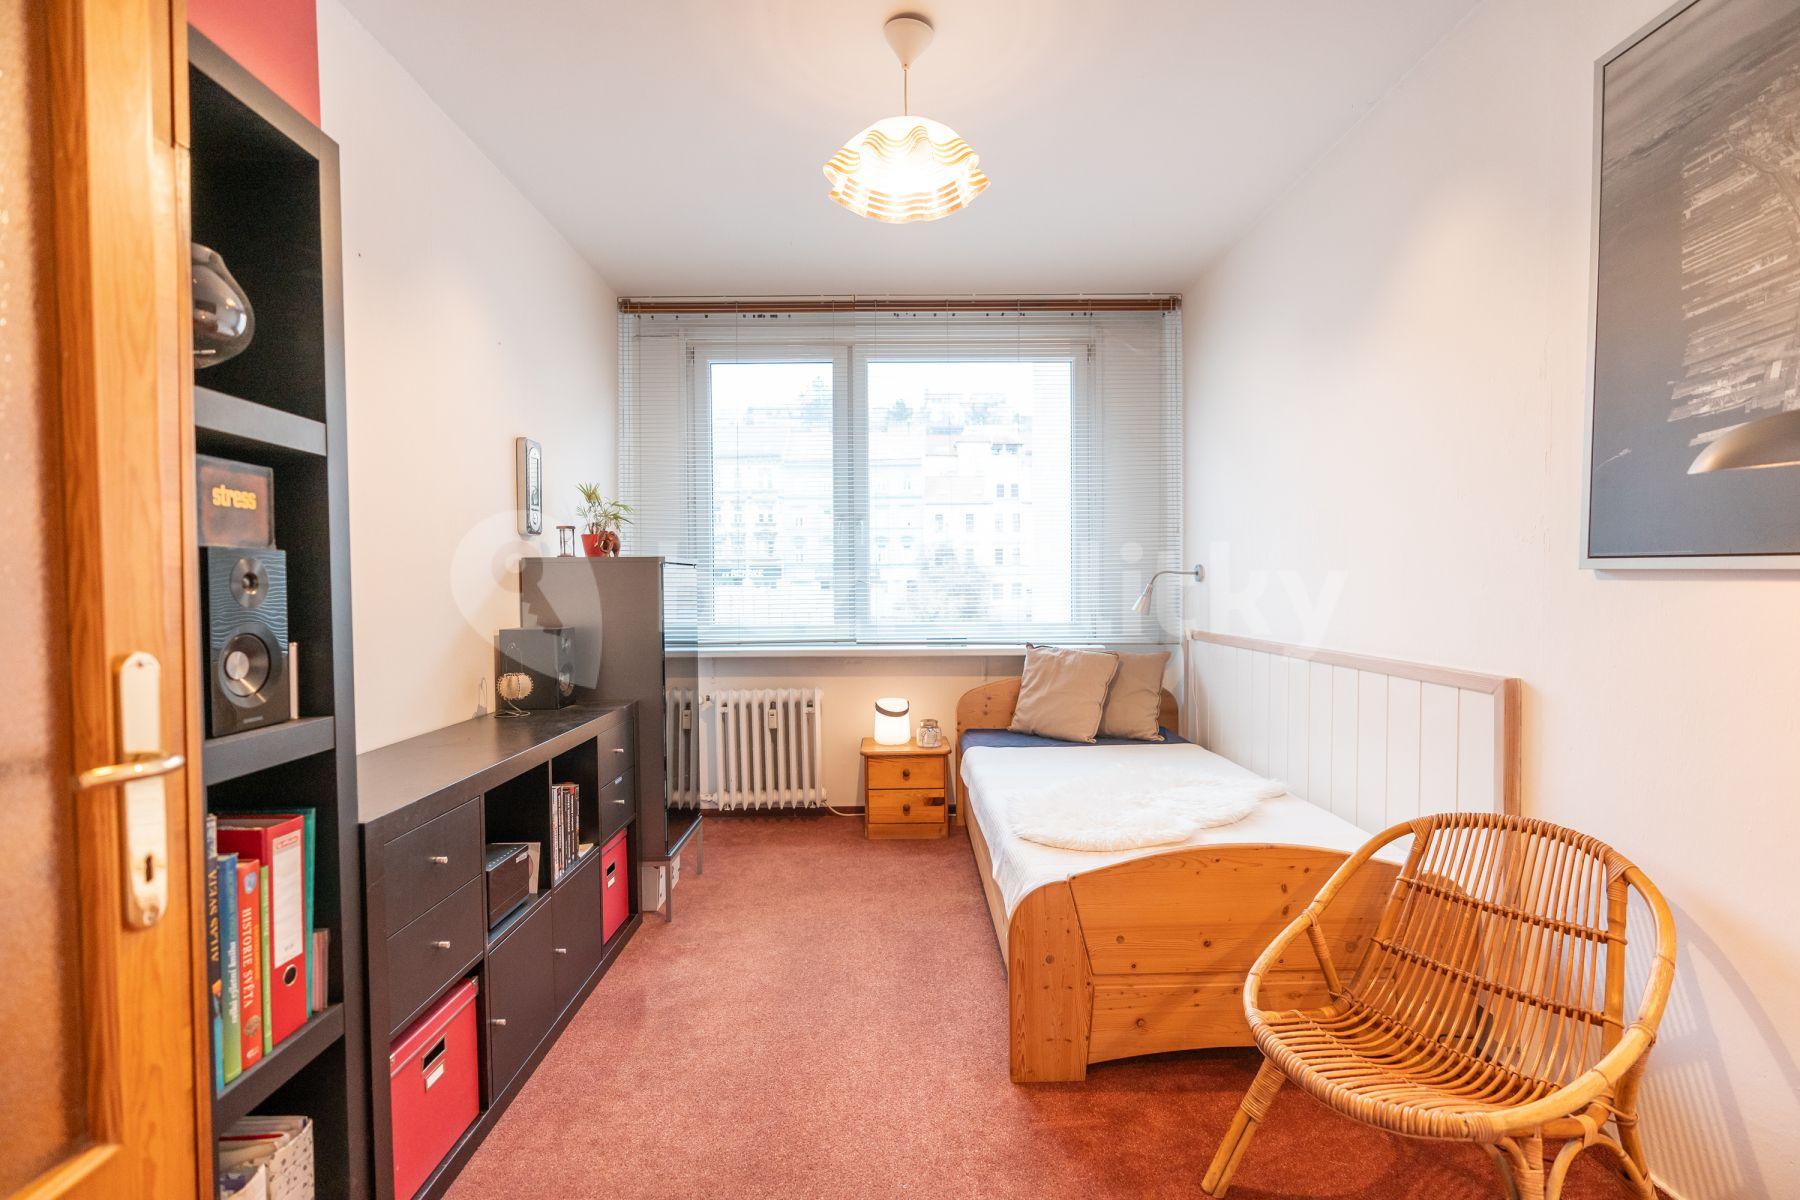 2 bedroom with open-plan kitchen flat to rent, 77 m², Vrchlického, Prague, Prague